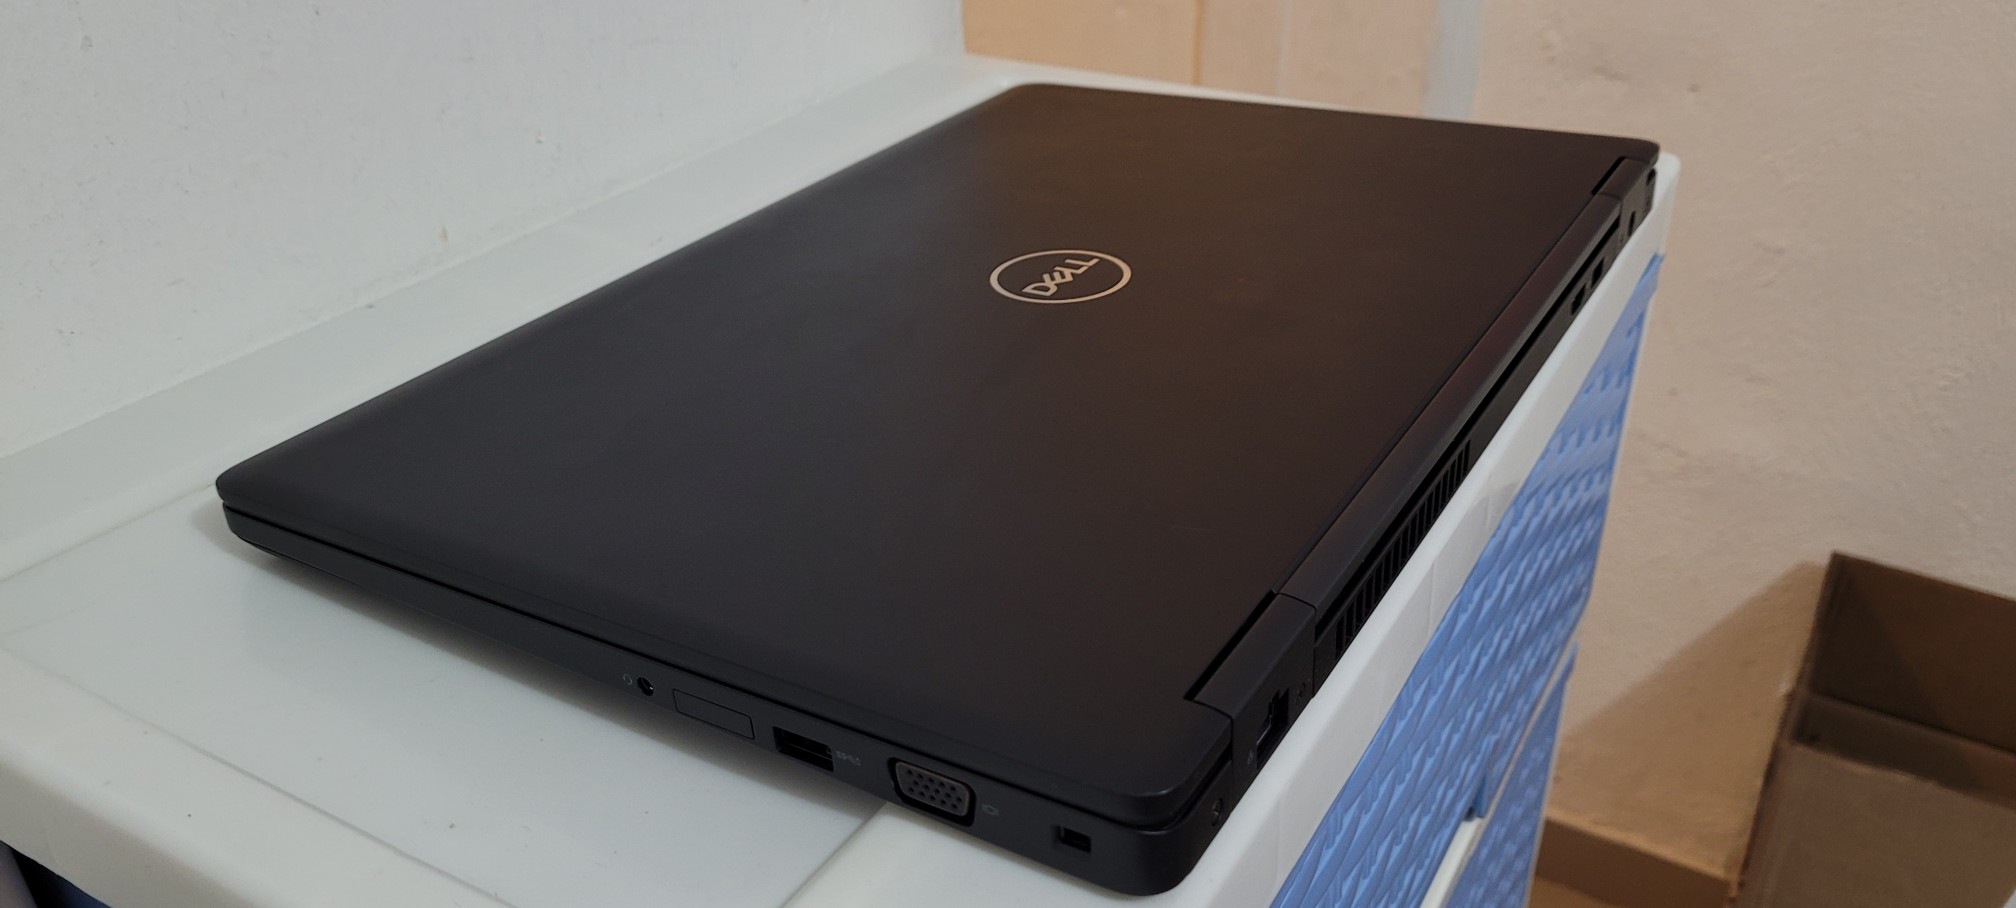 computadoras y laptops - Dell 5580 17 Pulg Core i5 7ma Gen Ram 12gb ddr4 Disco 128gb SSD Nvidea MX 940 2g 2